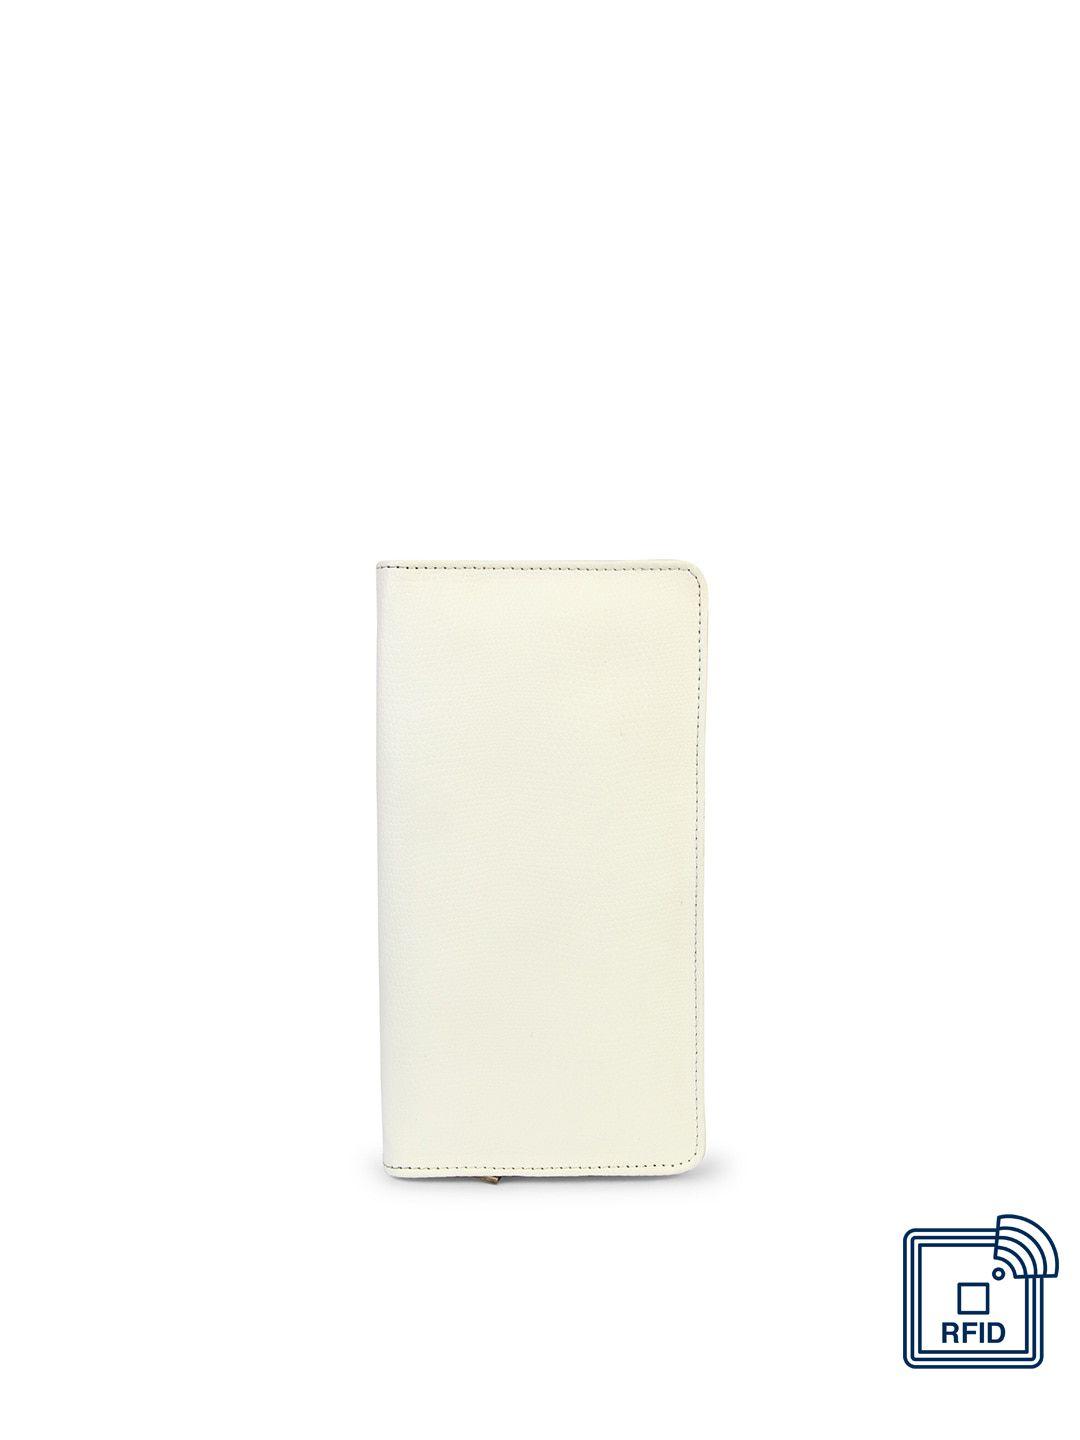 mutaqinoti unisex white textured zip around wallet